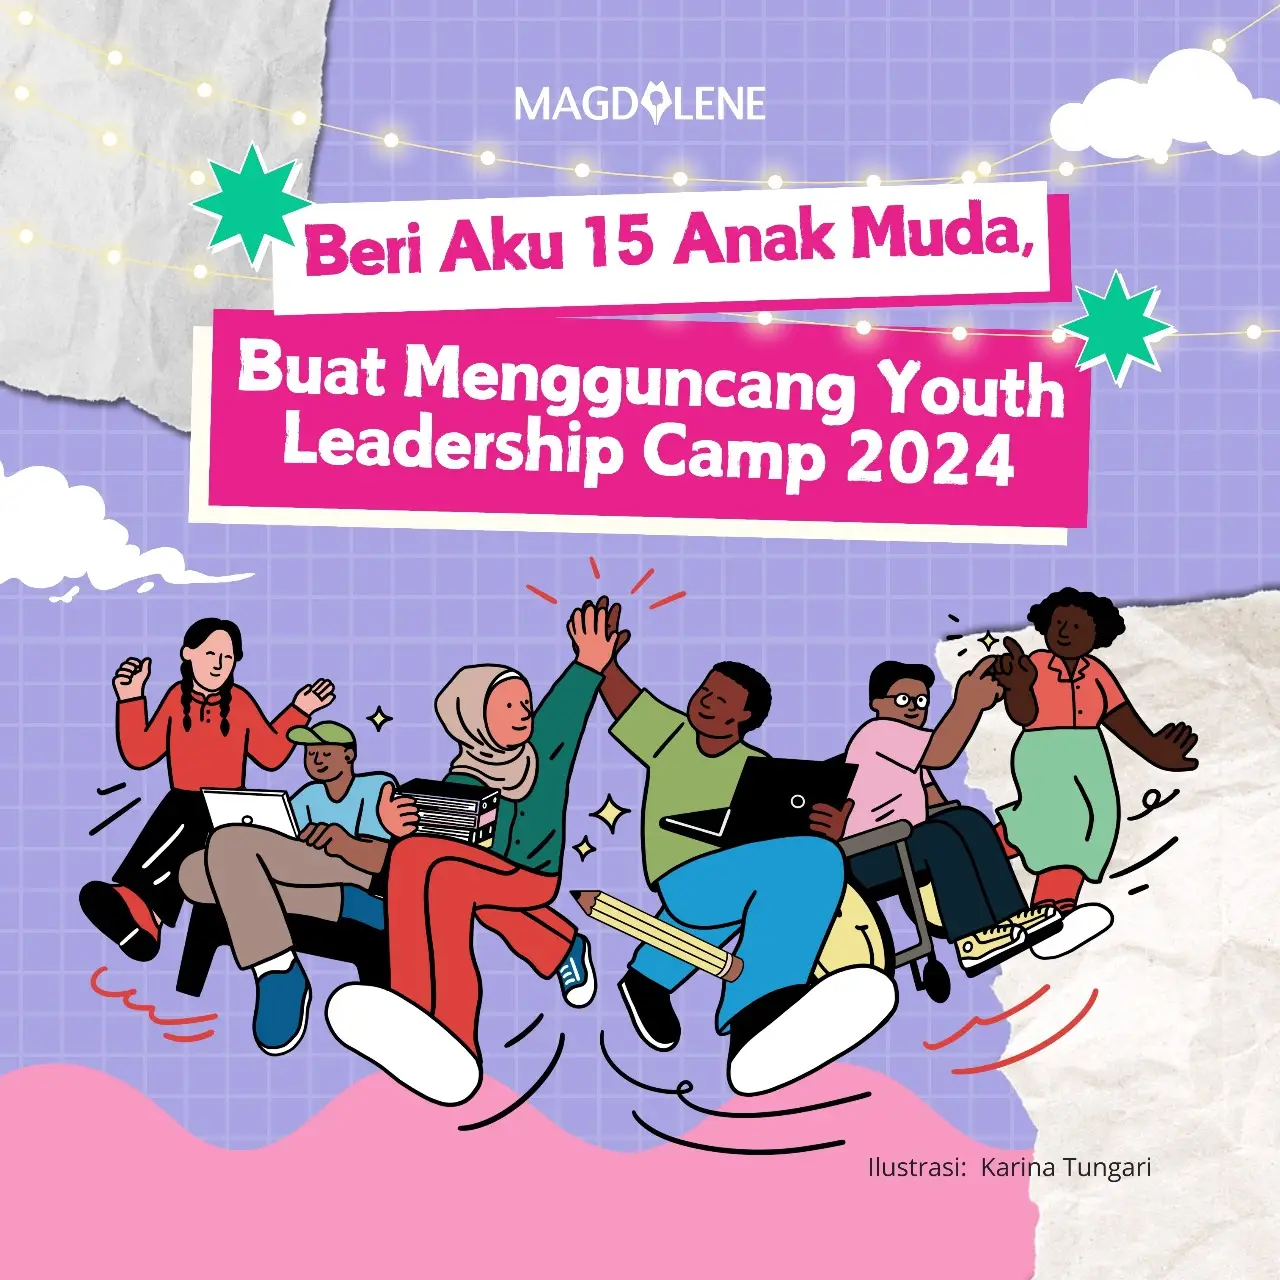 Youth Leadership Camp 2024